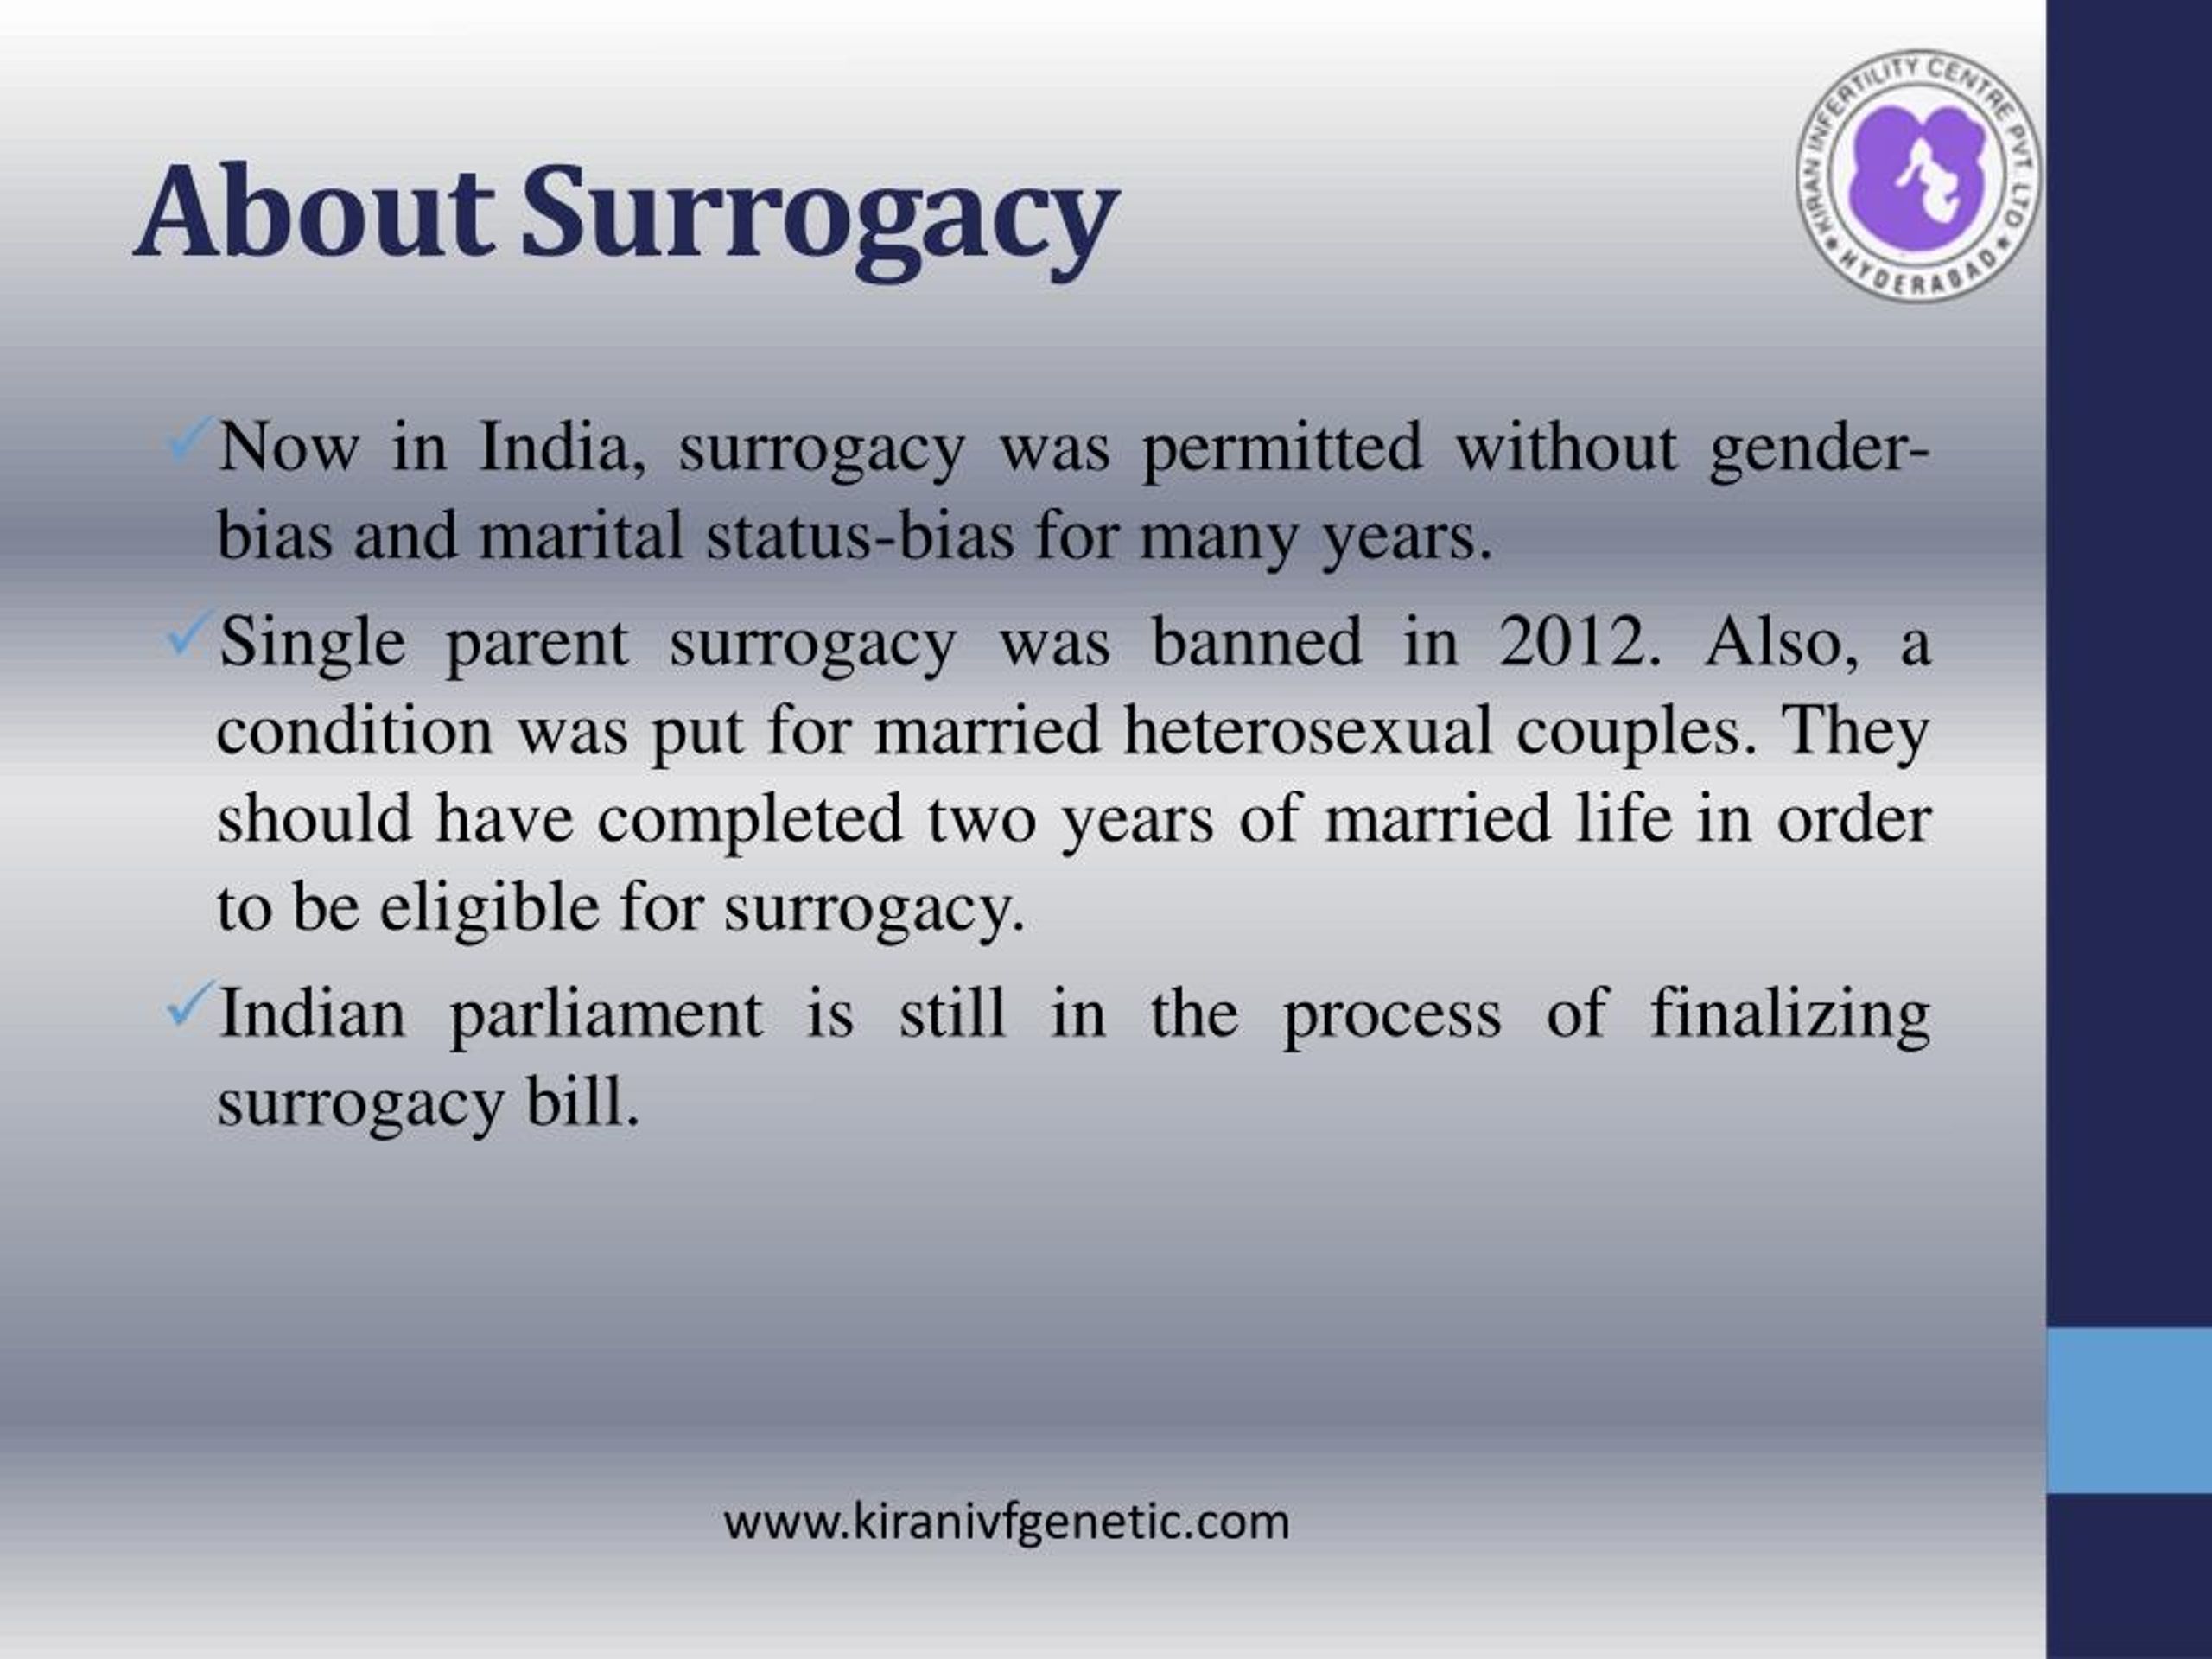 essay on ethics of surrogacy